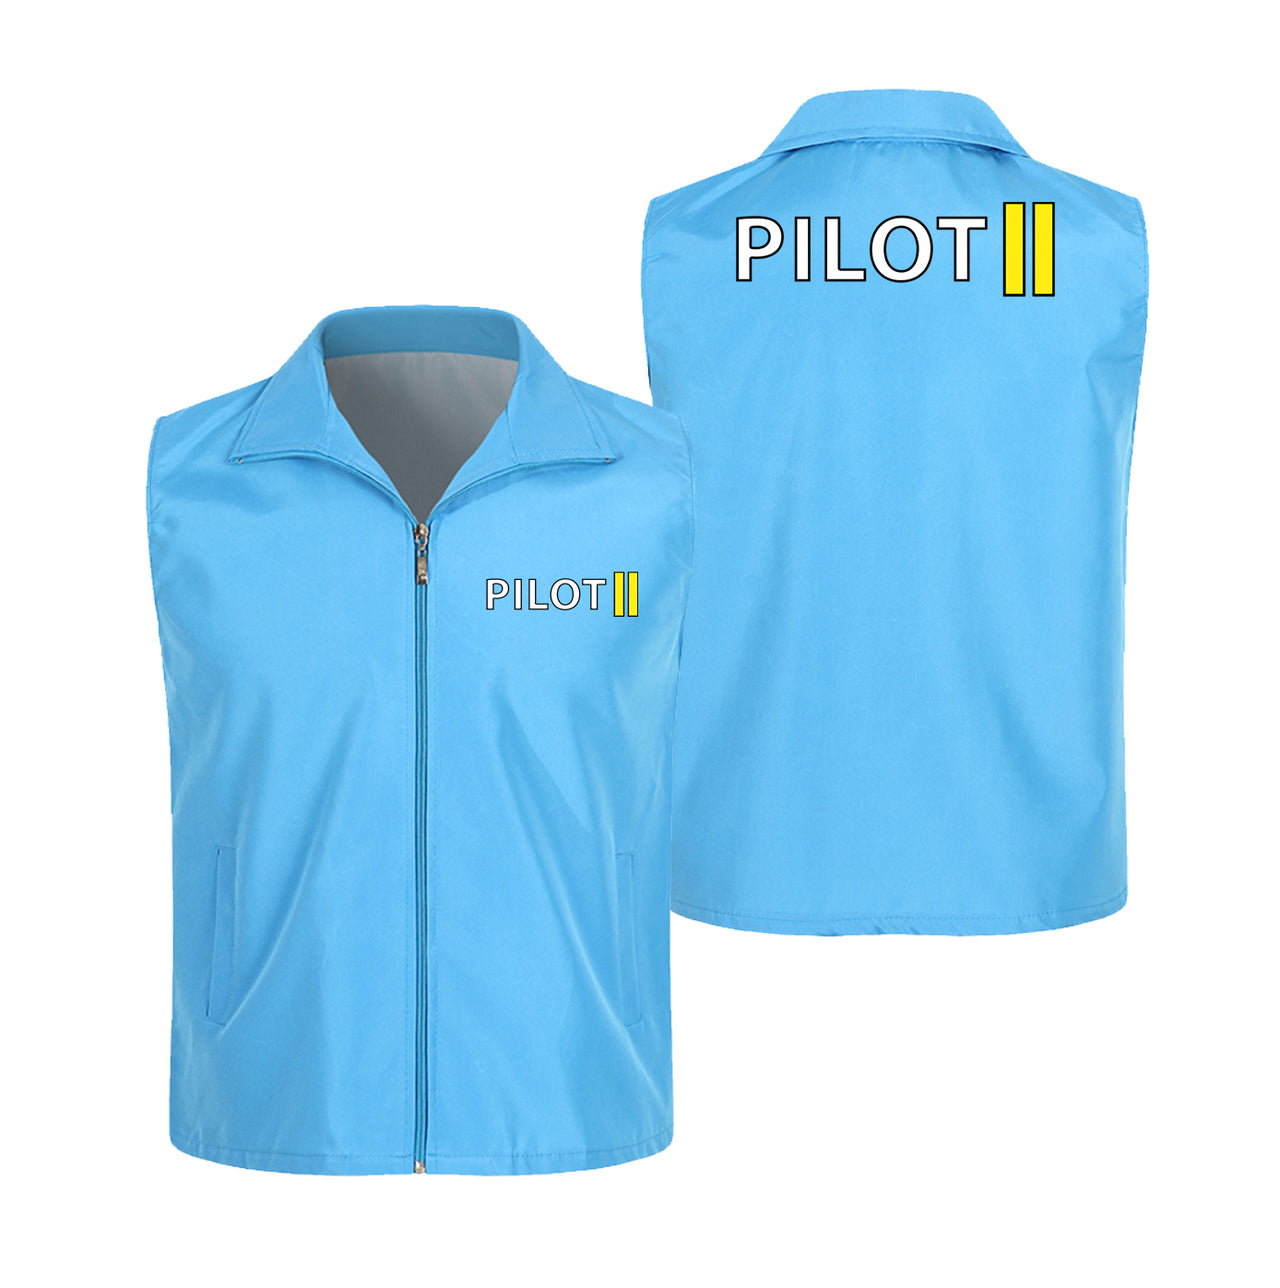 Pilot & Stripes (2 Lines) Designed Thin Style Vests